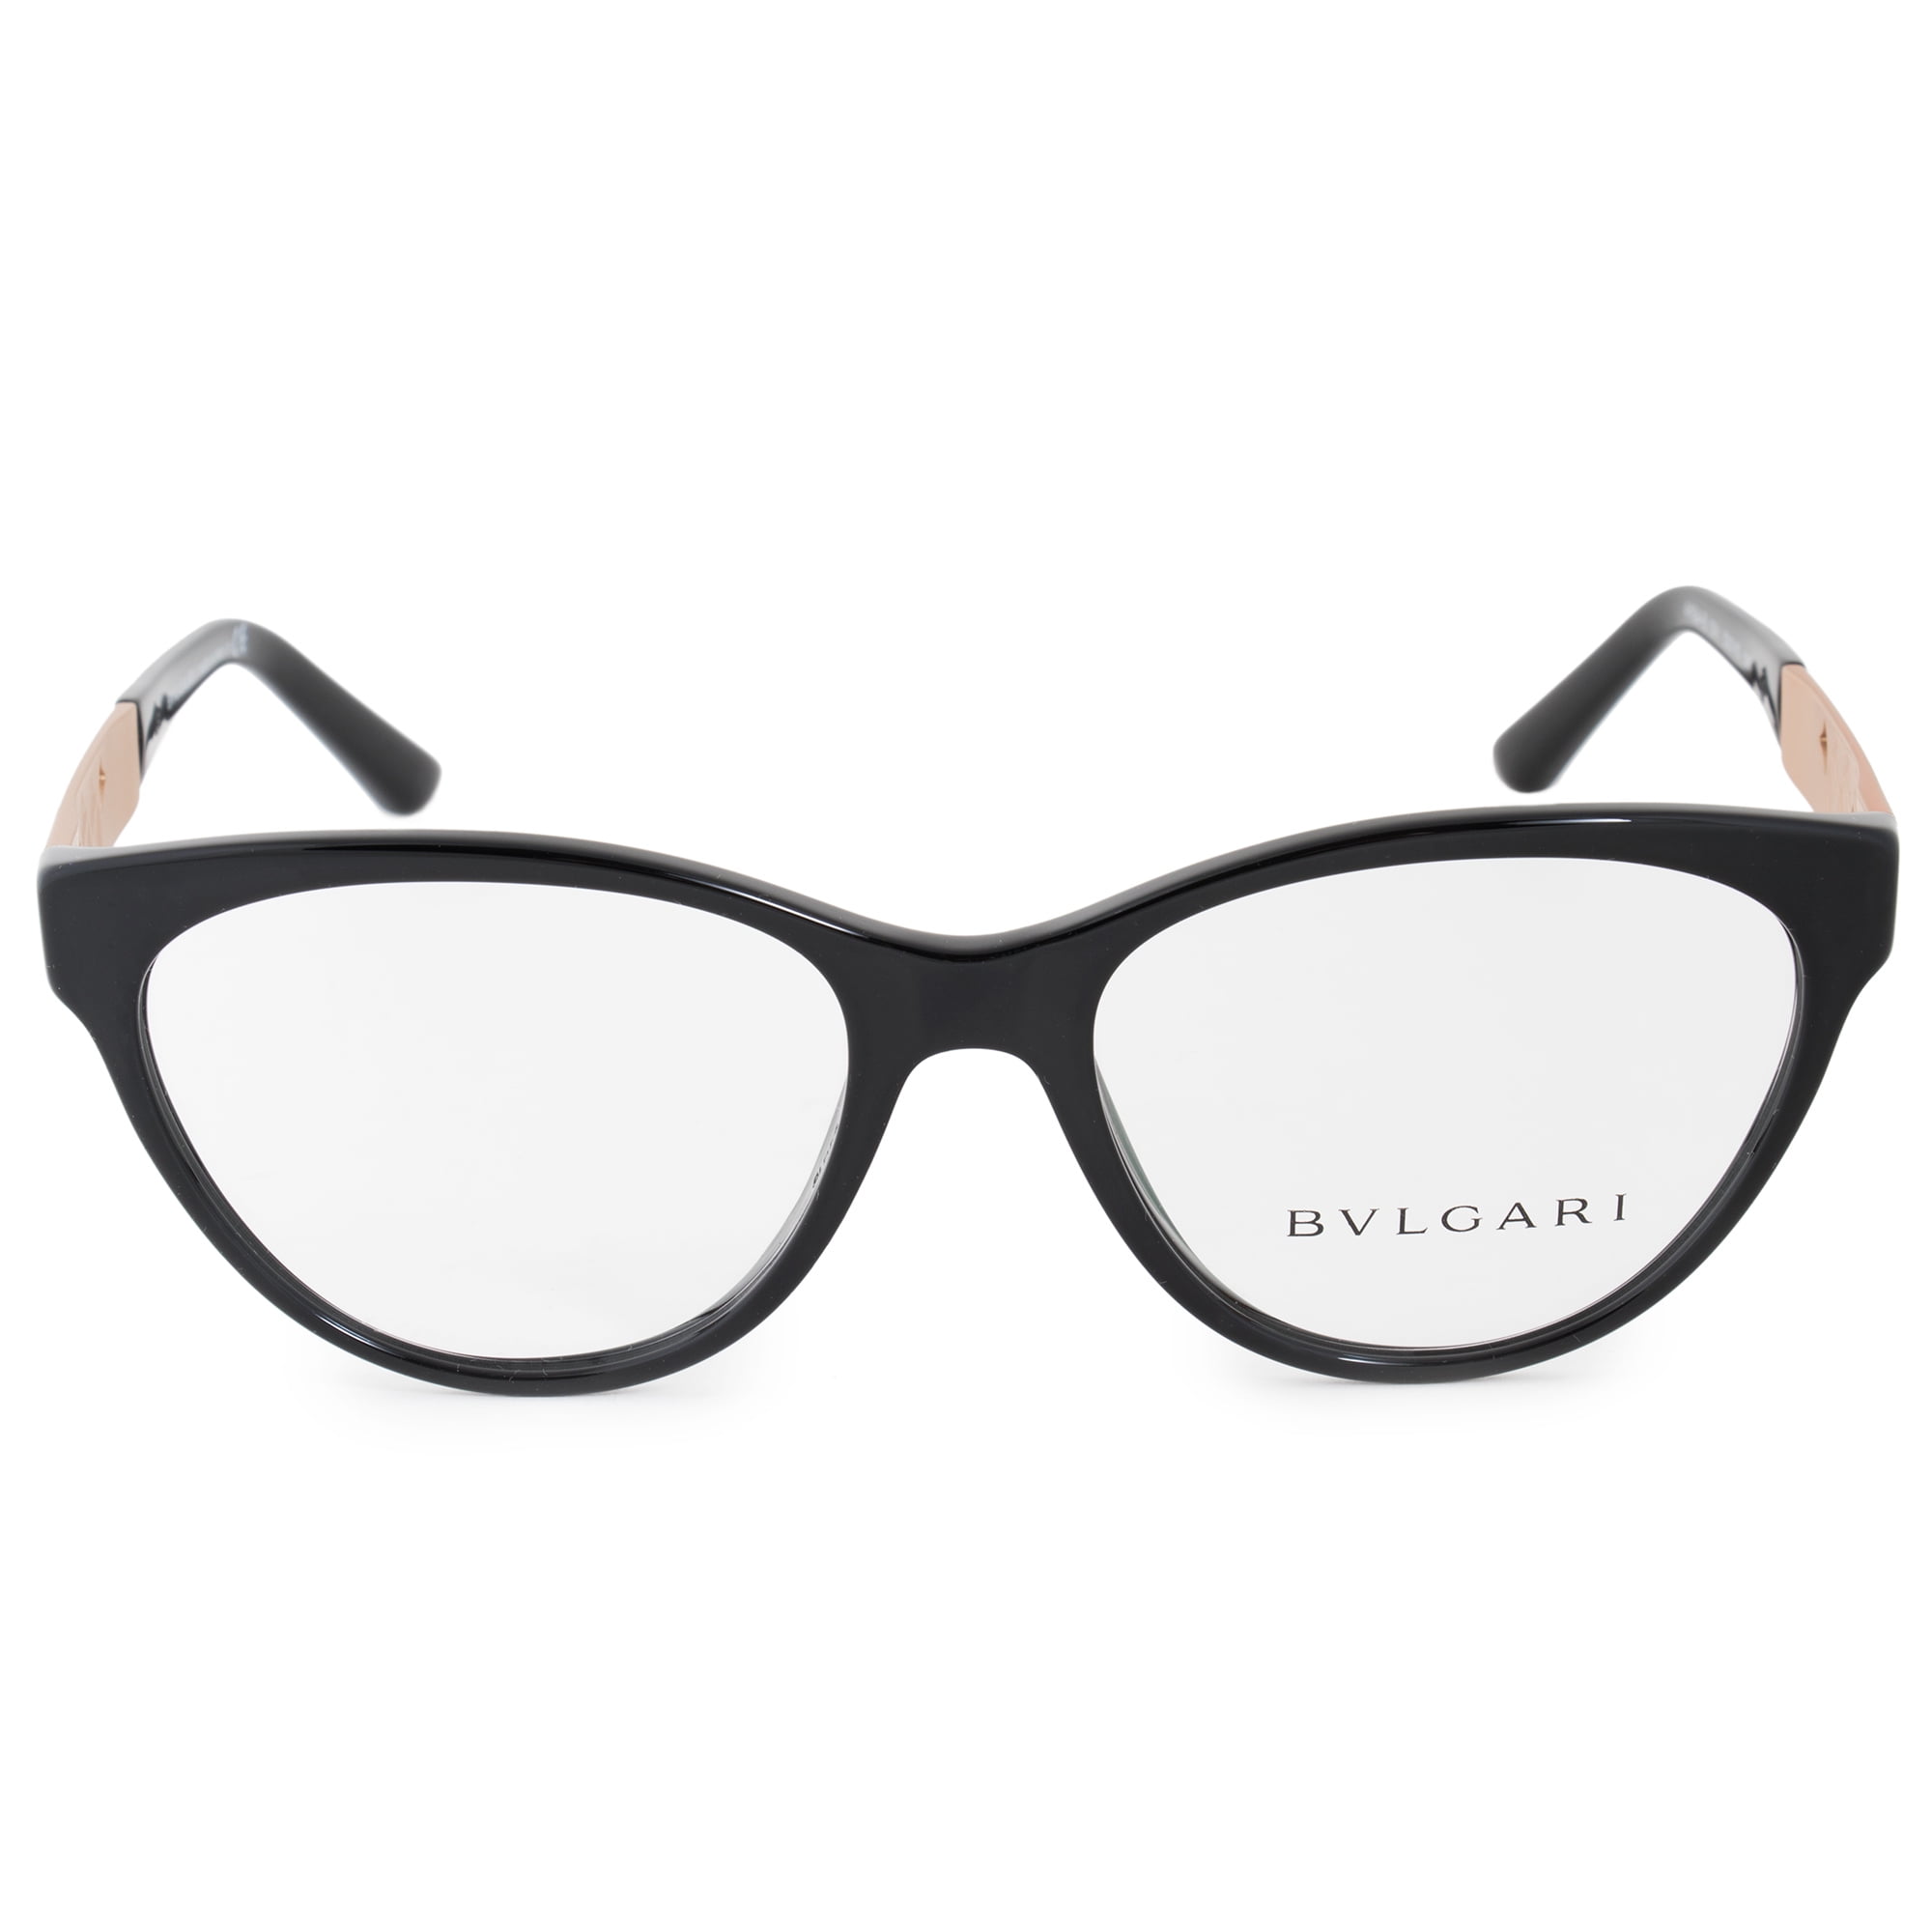 bvlgari eyeglass frames canada